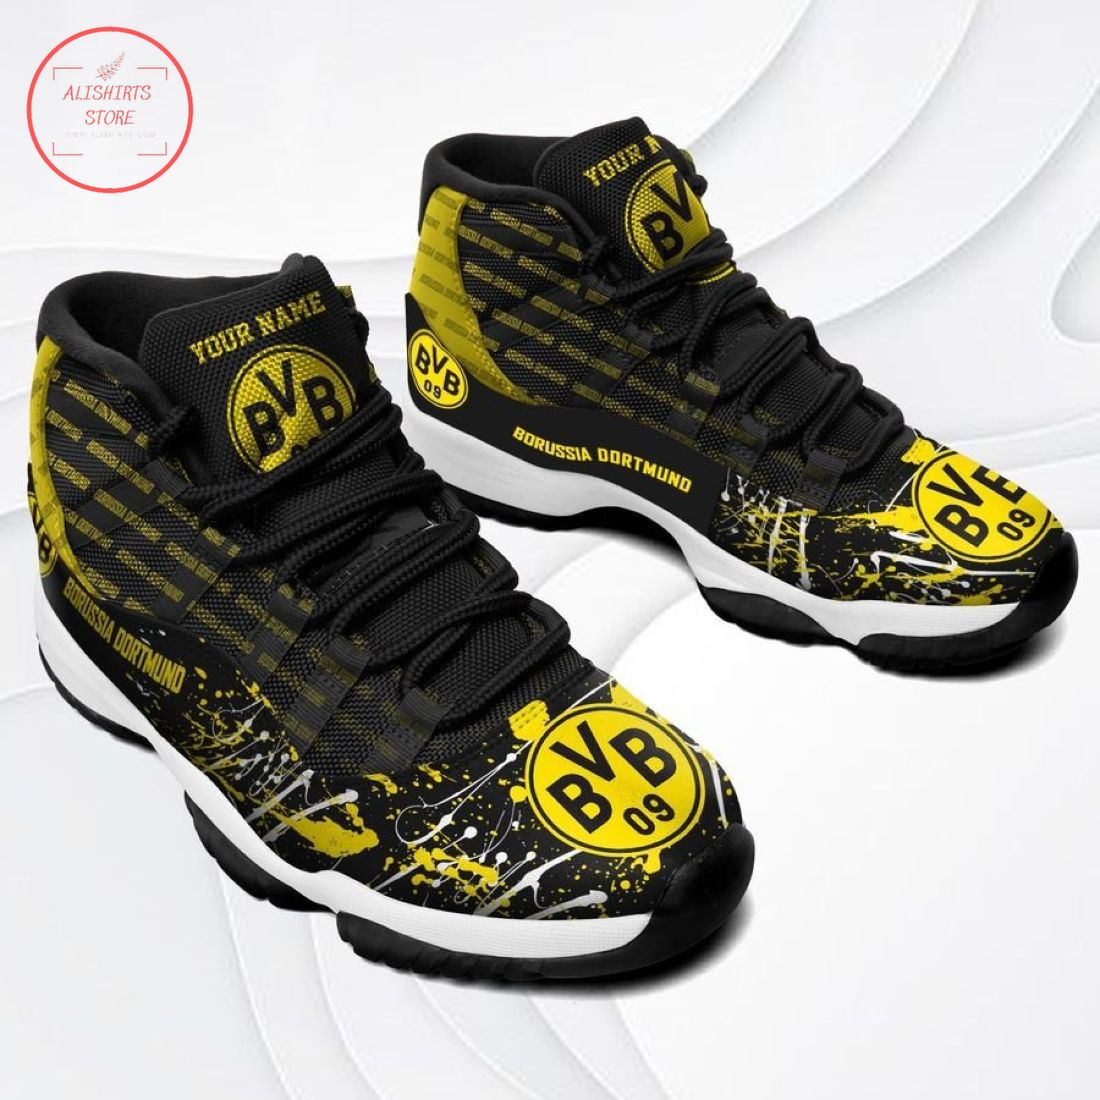 Borussia Dortmund Customized New Air Jordan 11 Sneakers Shoes